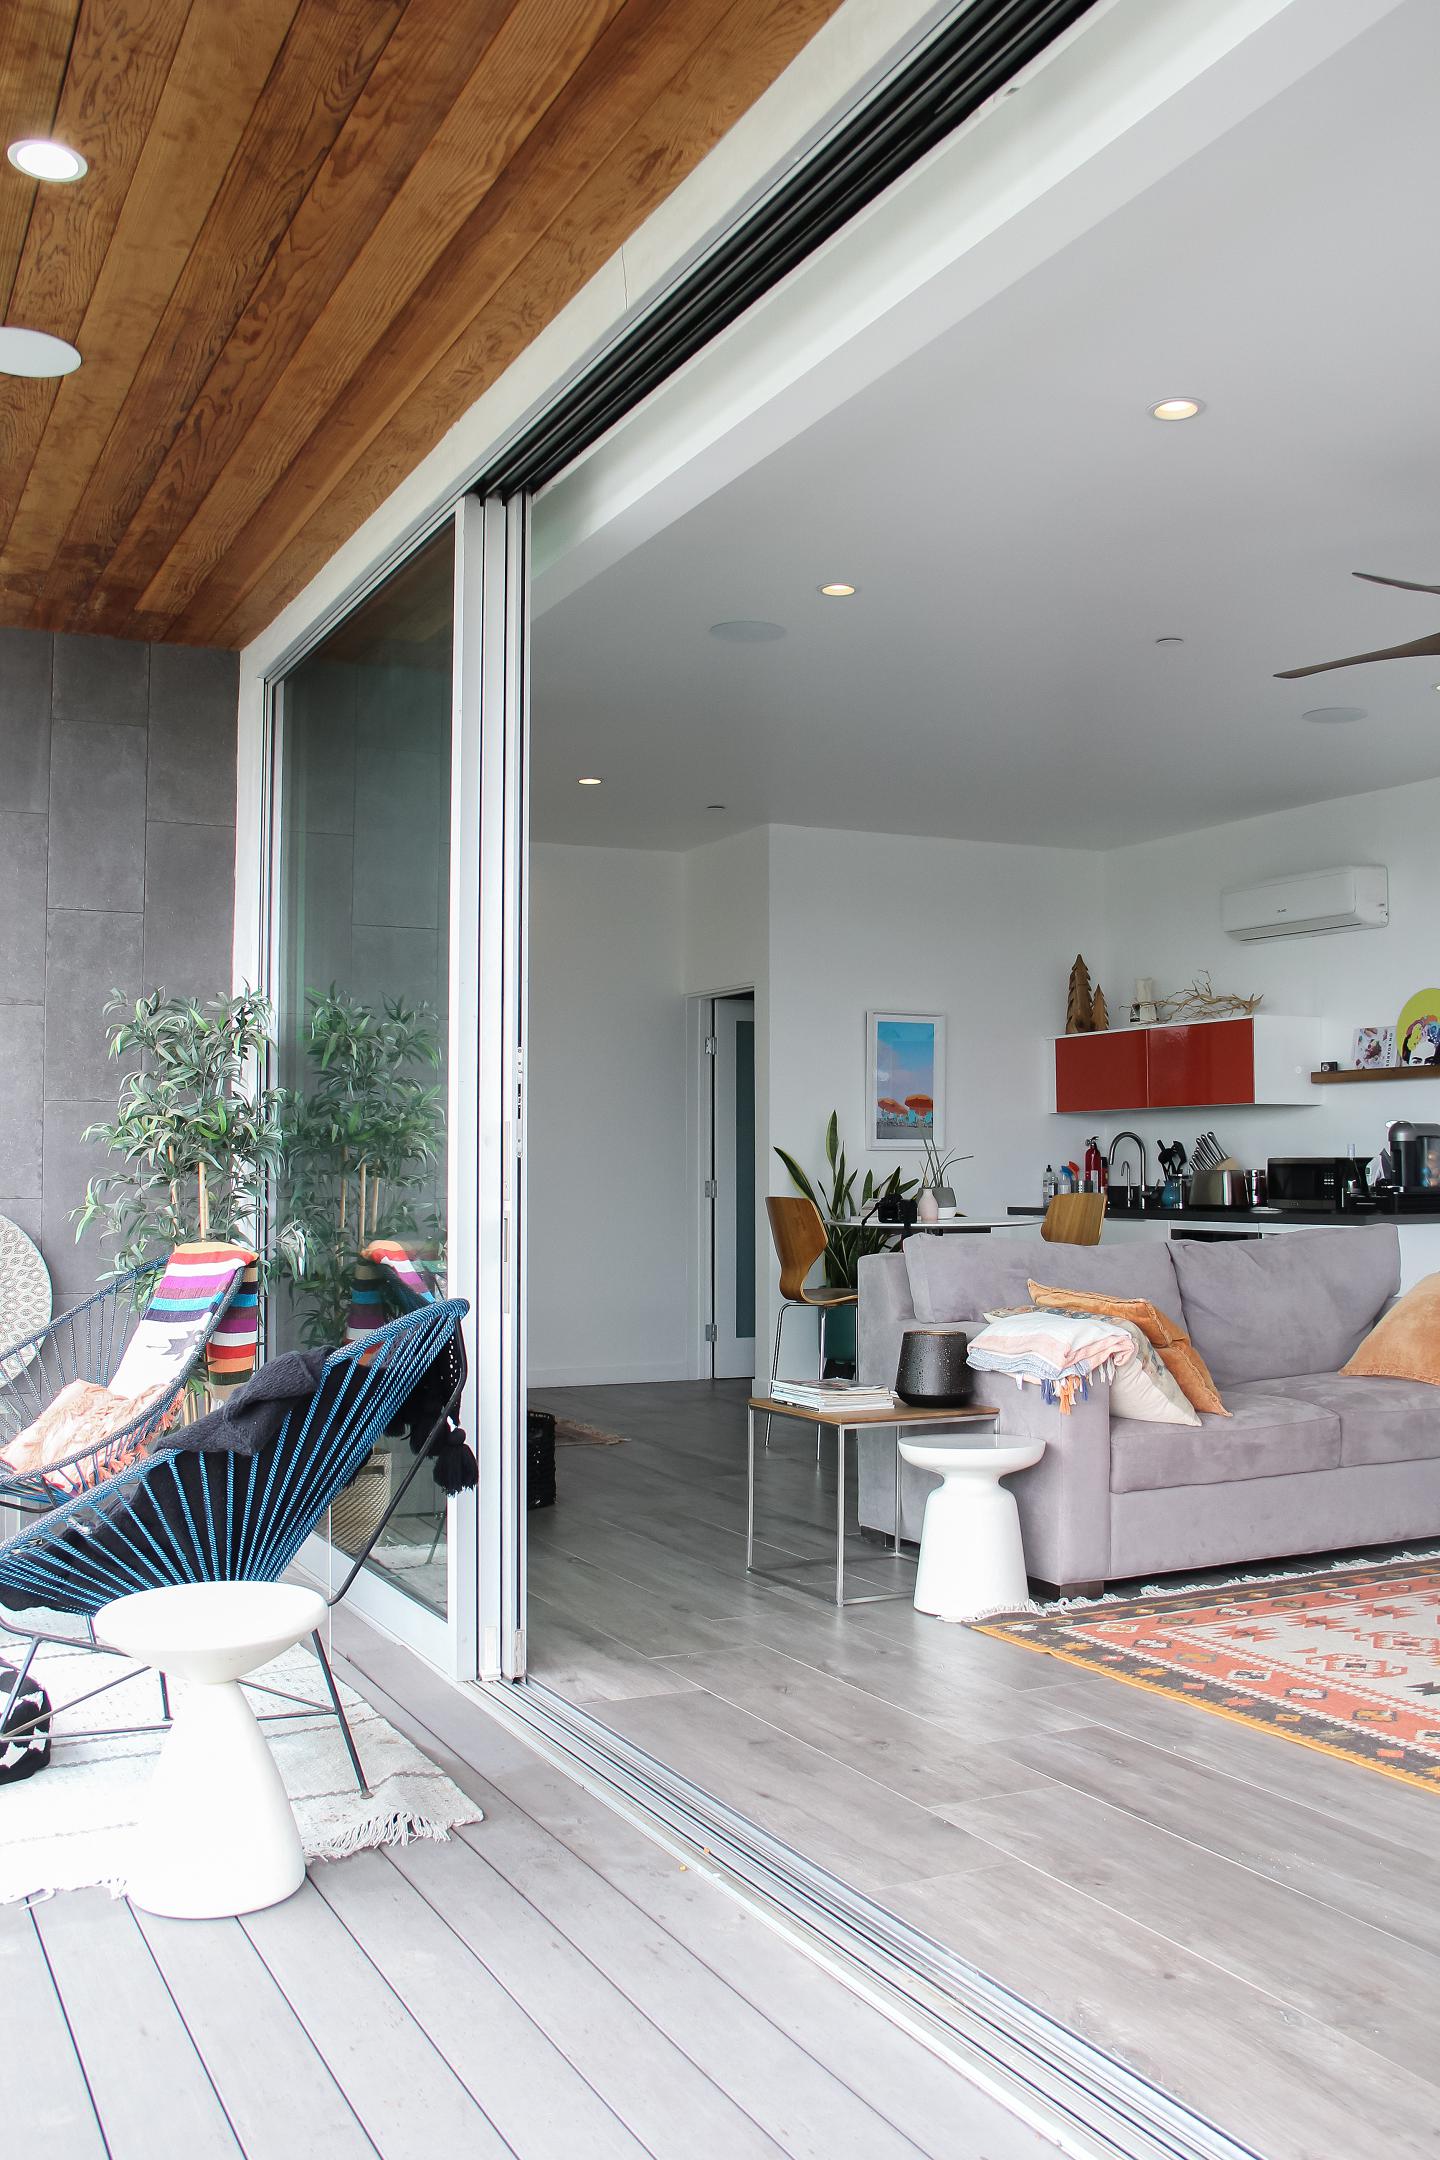 Modern interior, sliding glass door, cozy living space.